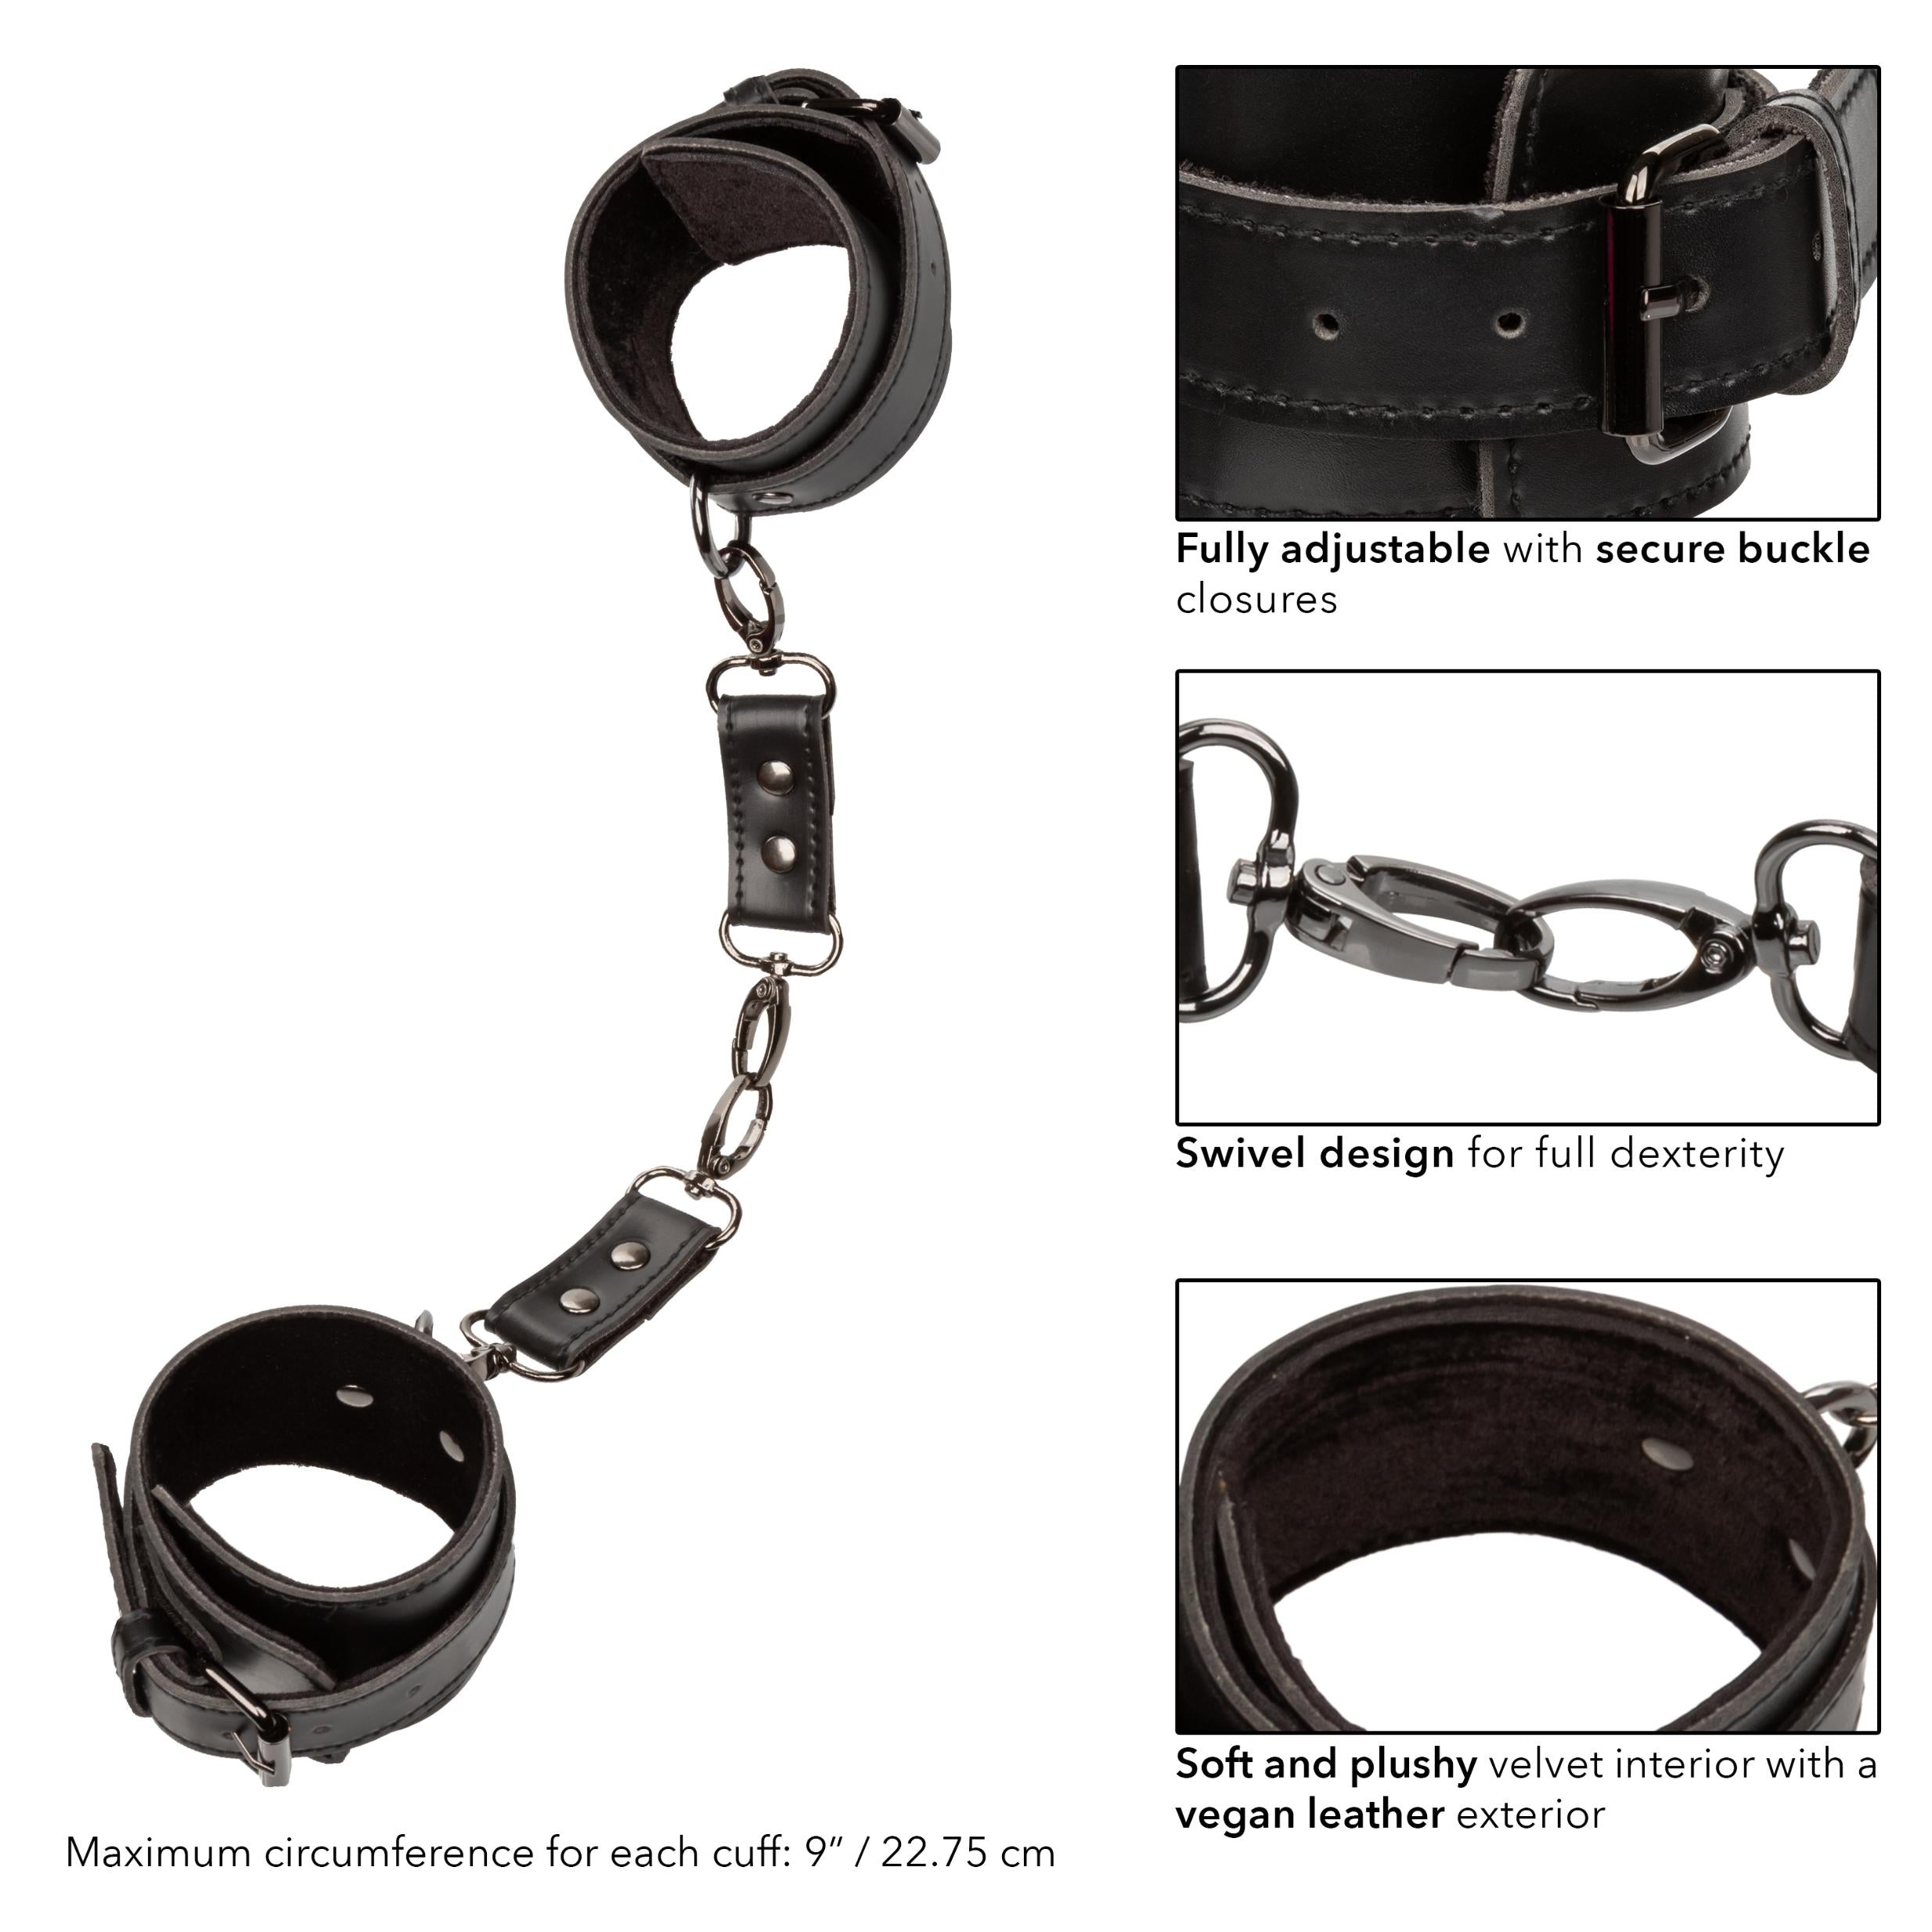 Euphoria Collection Hand Cuffs - Black